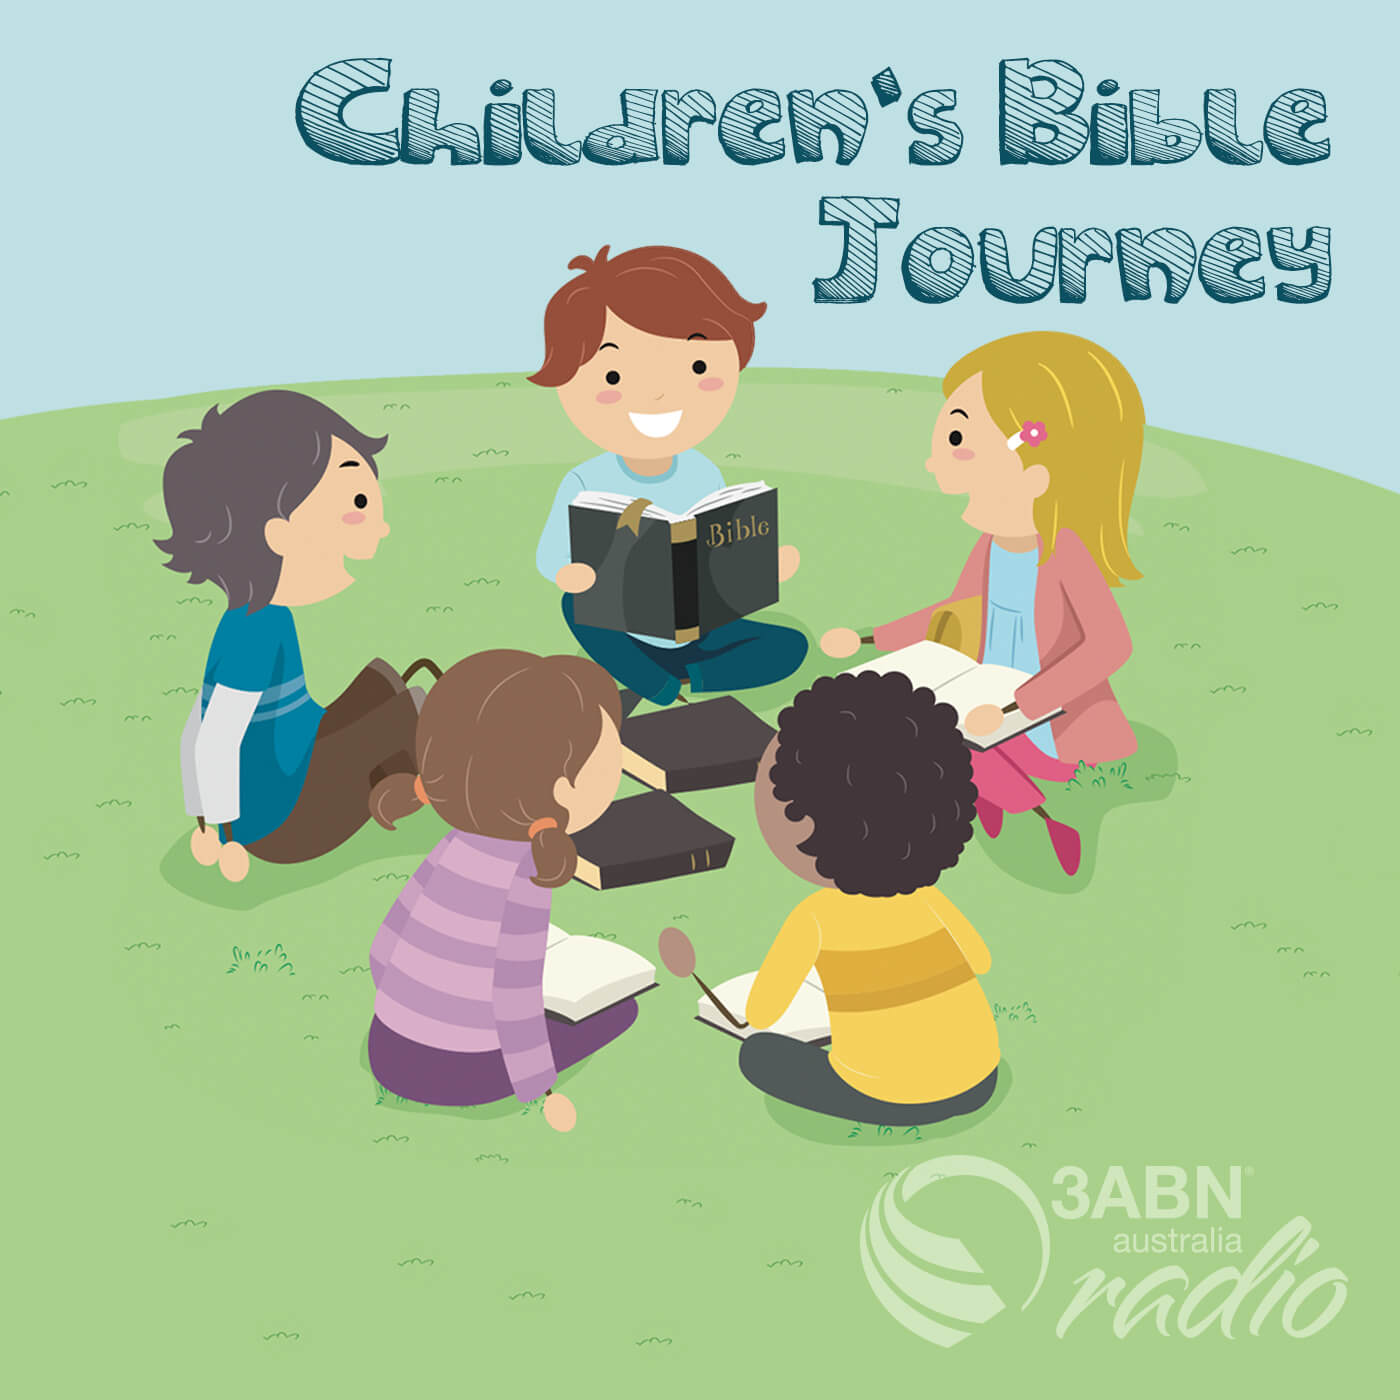 Children’s Bible Journey - 2213